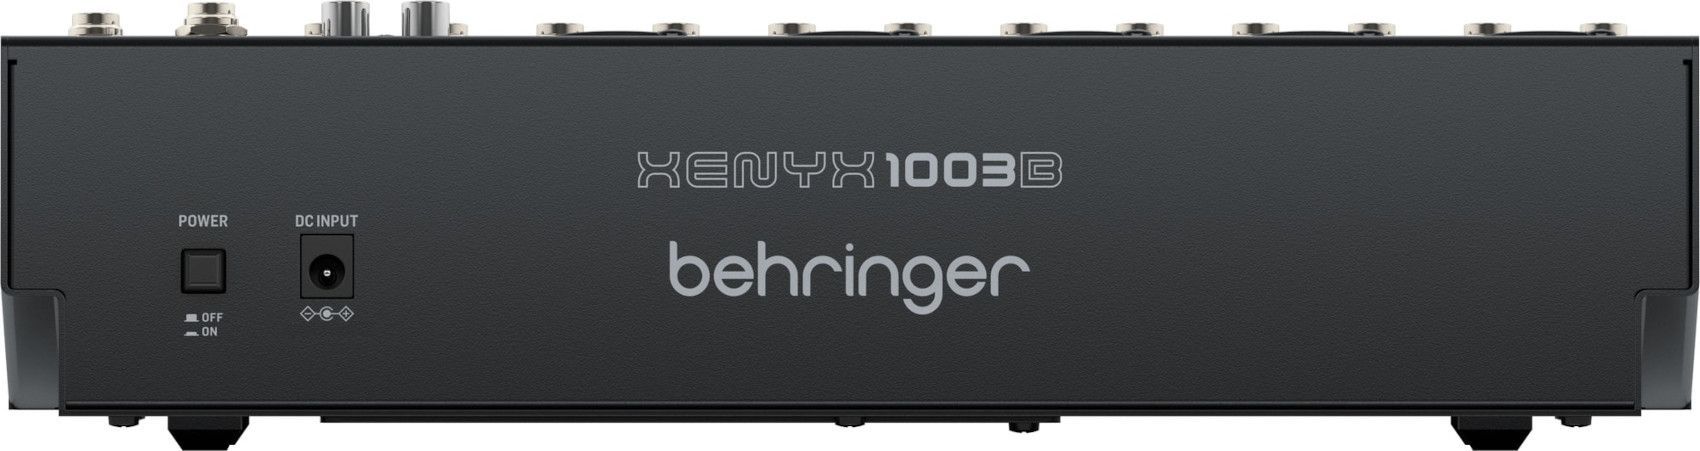 Behringer XENYX 1003B - фото 4